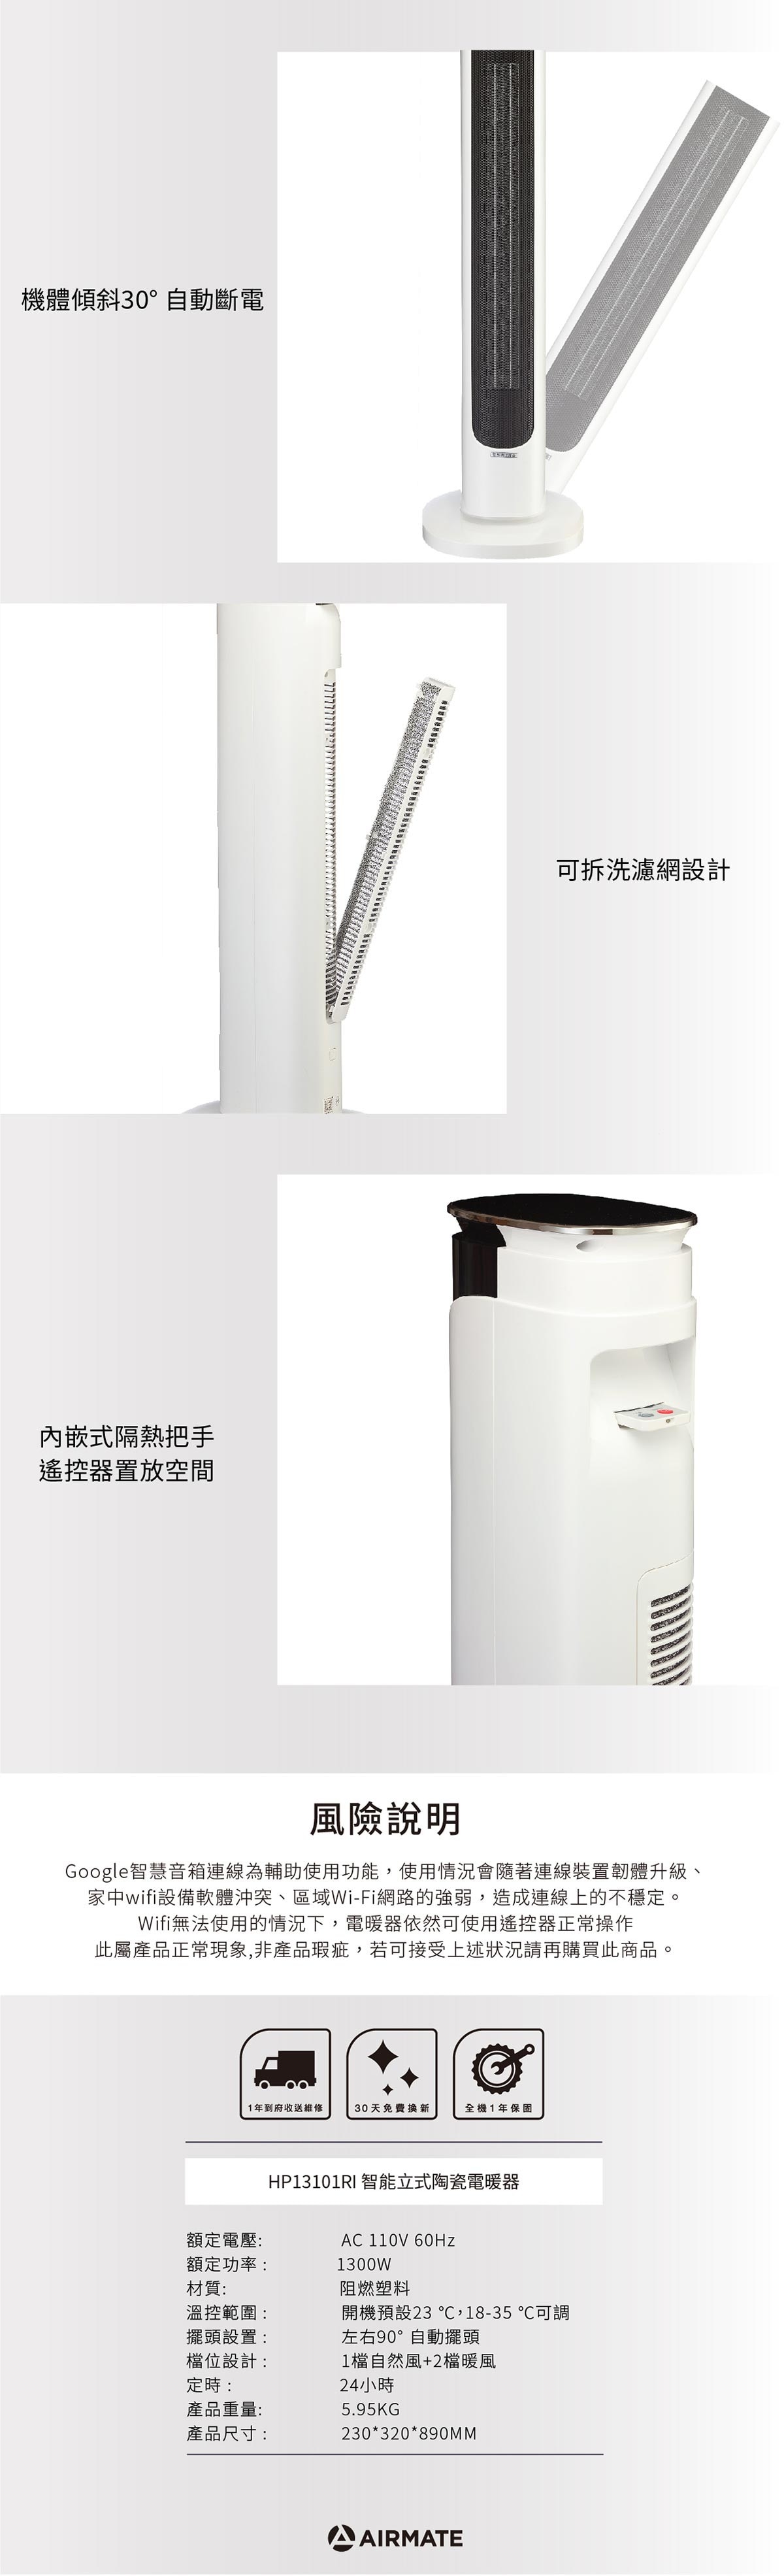 AIRMATE CERAMIC HEATER 艾美特智慧陶瓷電暖器 HP13101RI，支援 OK GOOGLE，超廣角送風設計，可拆洗濾網。